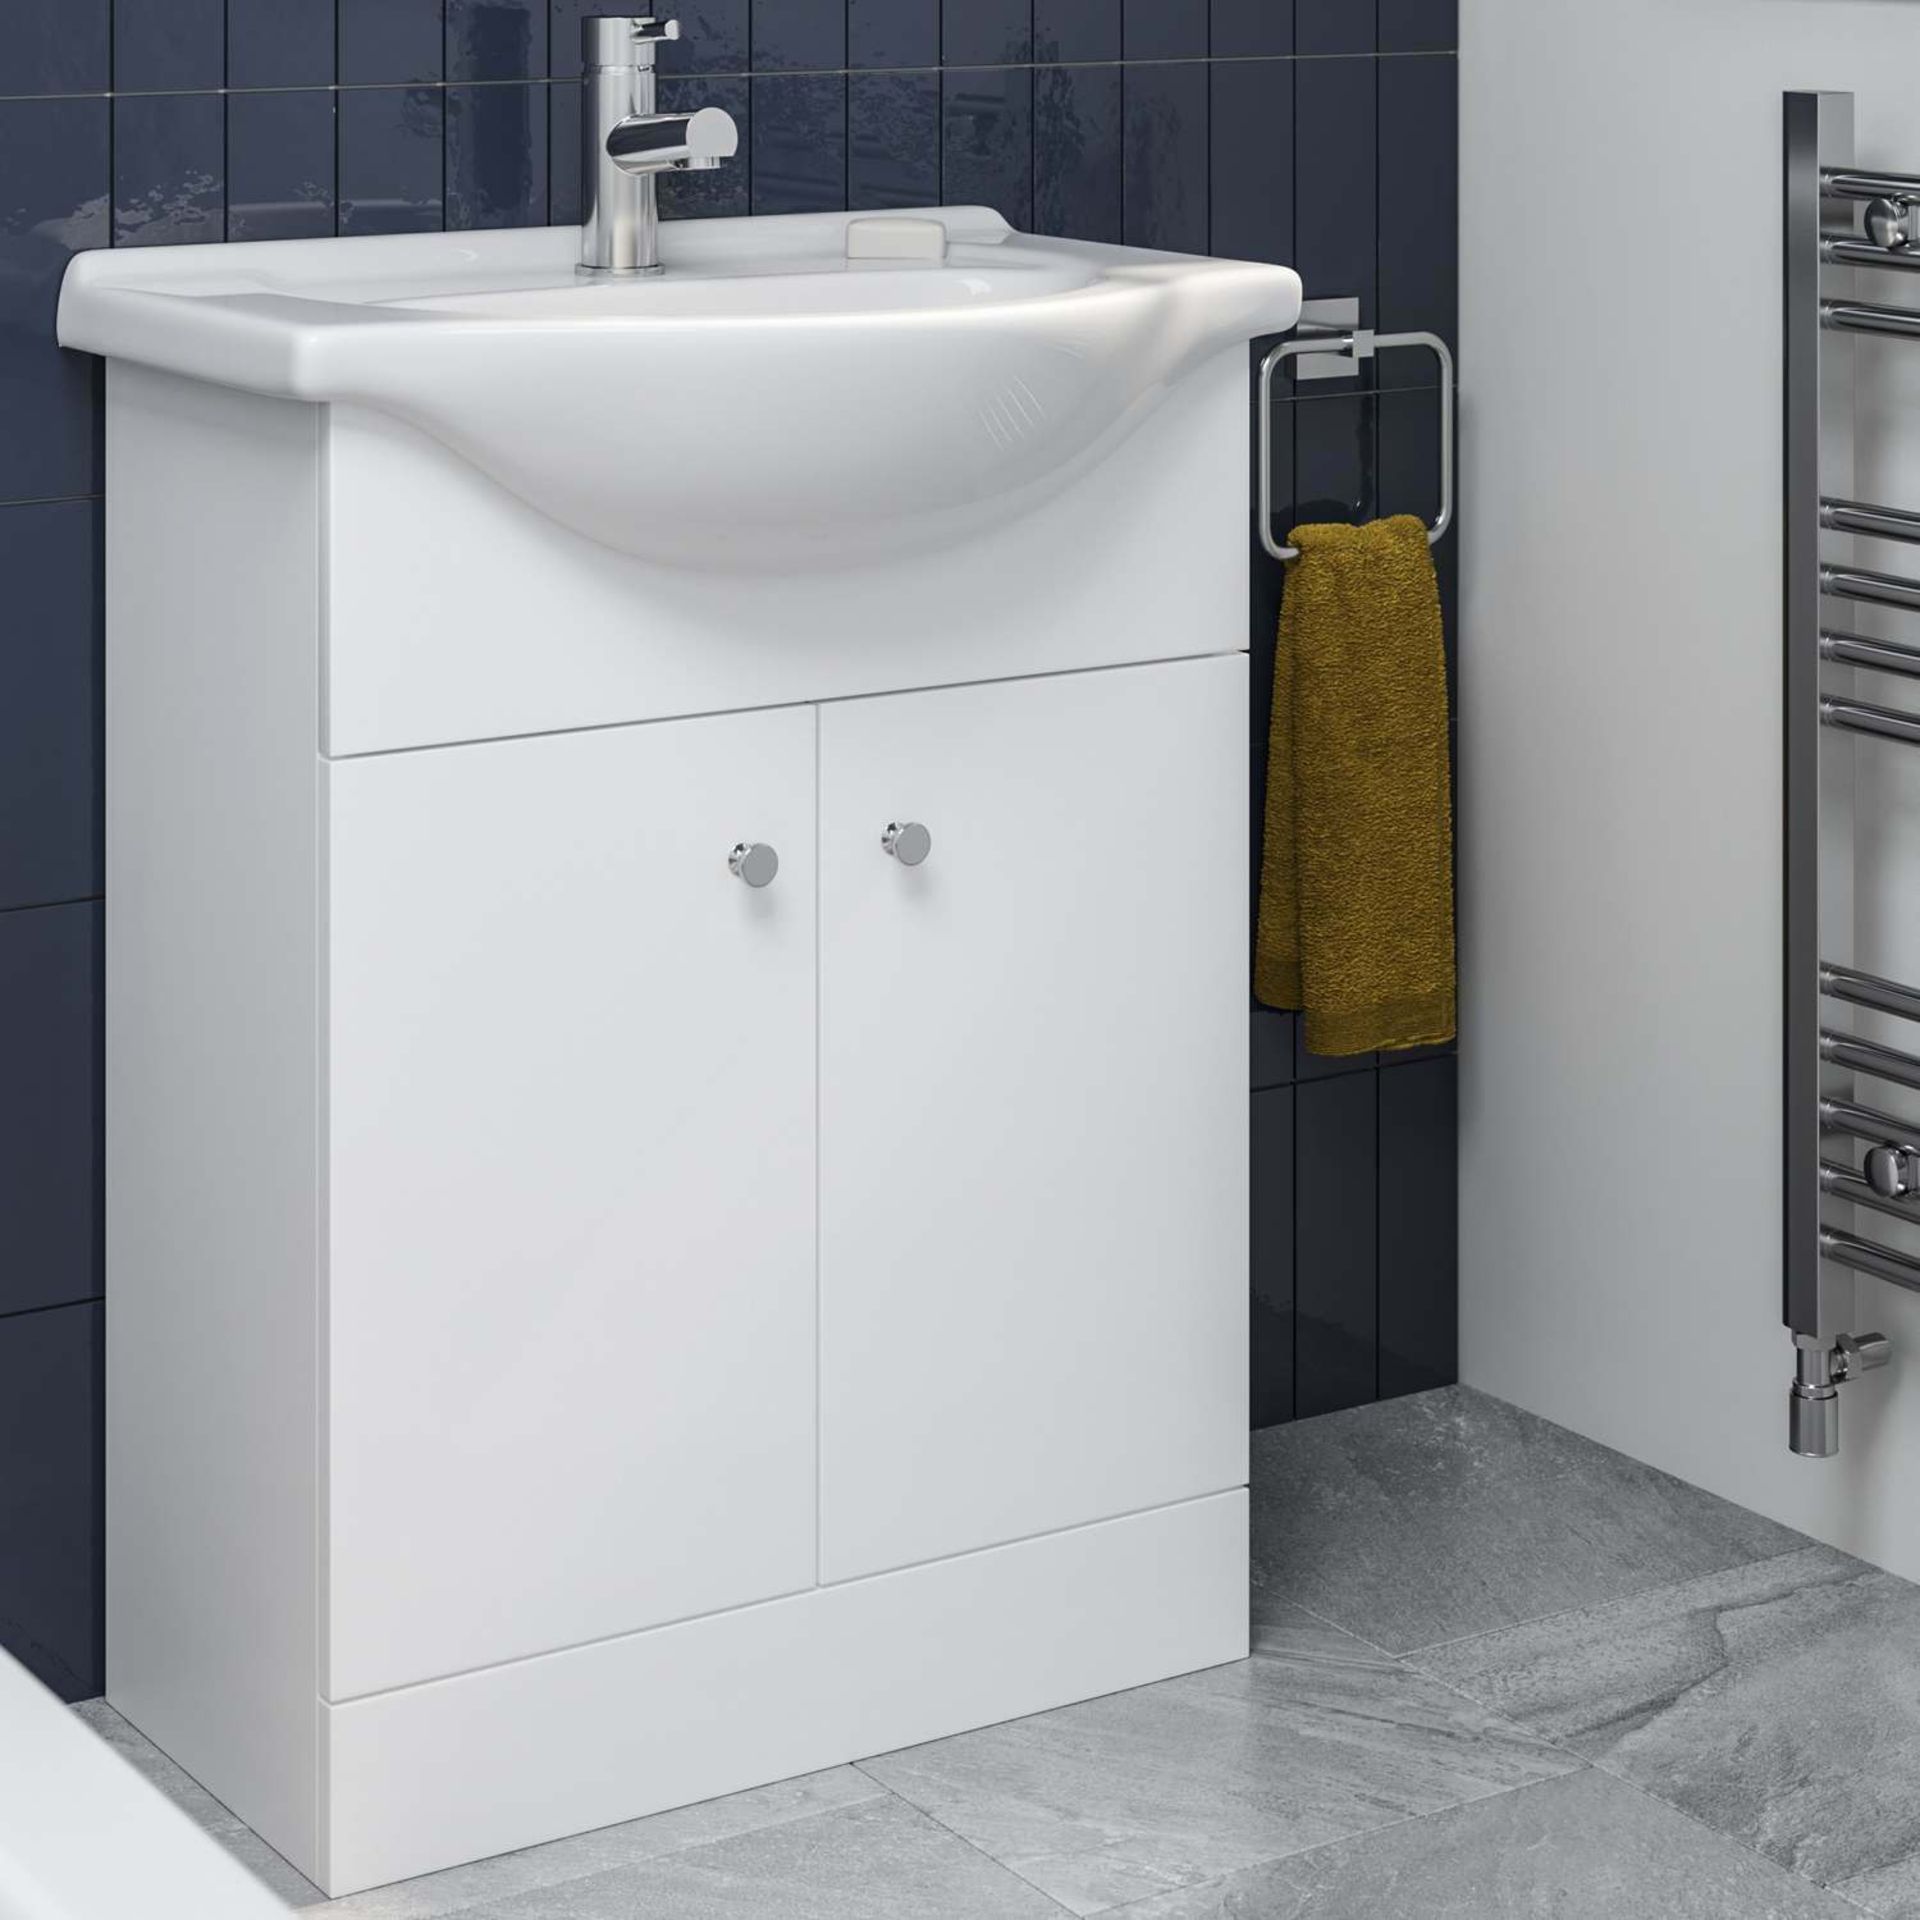 BRAND NEW BOXED 650mm Quartz White Basin Vanity Unit- Floor Standing. RRP £399.99. - Image 3 of 3